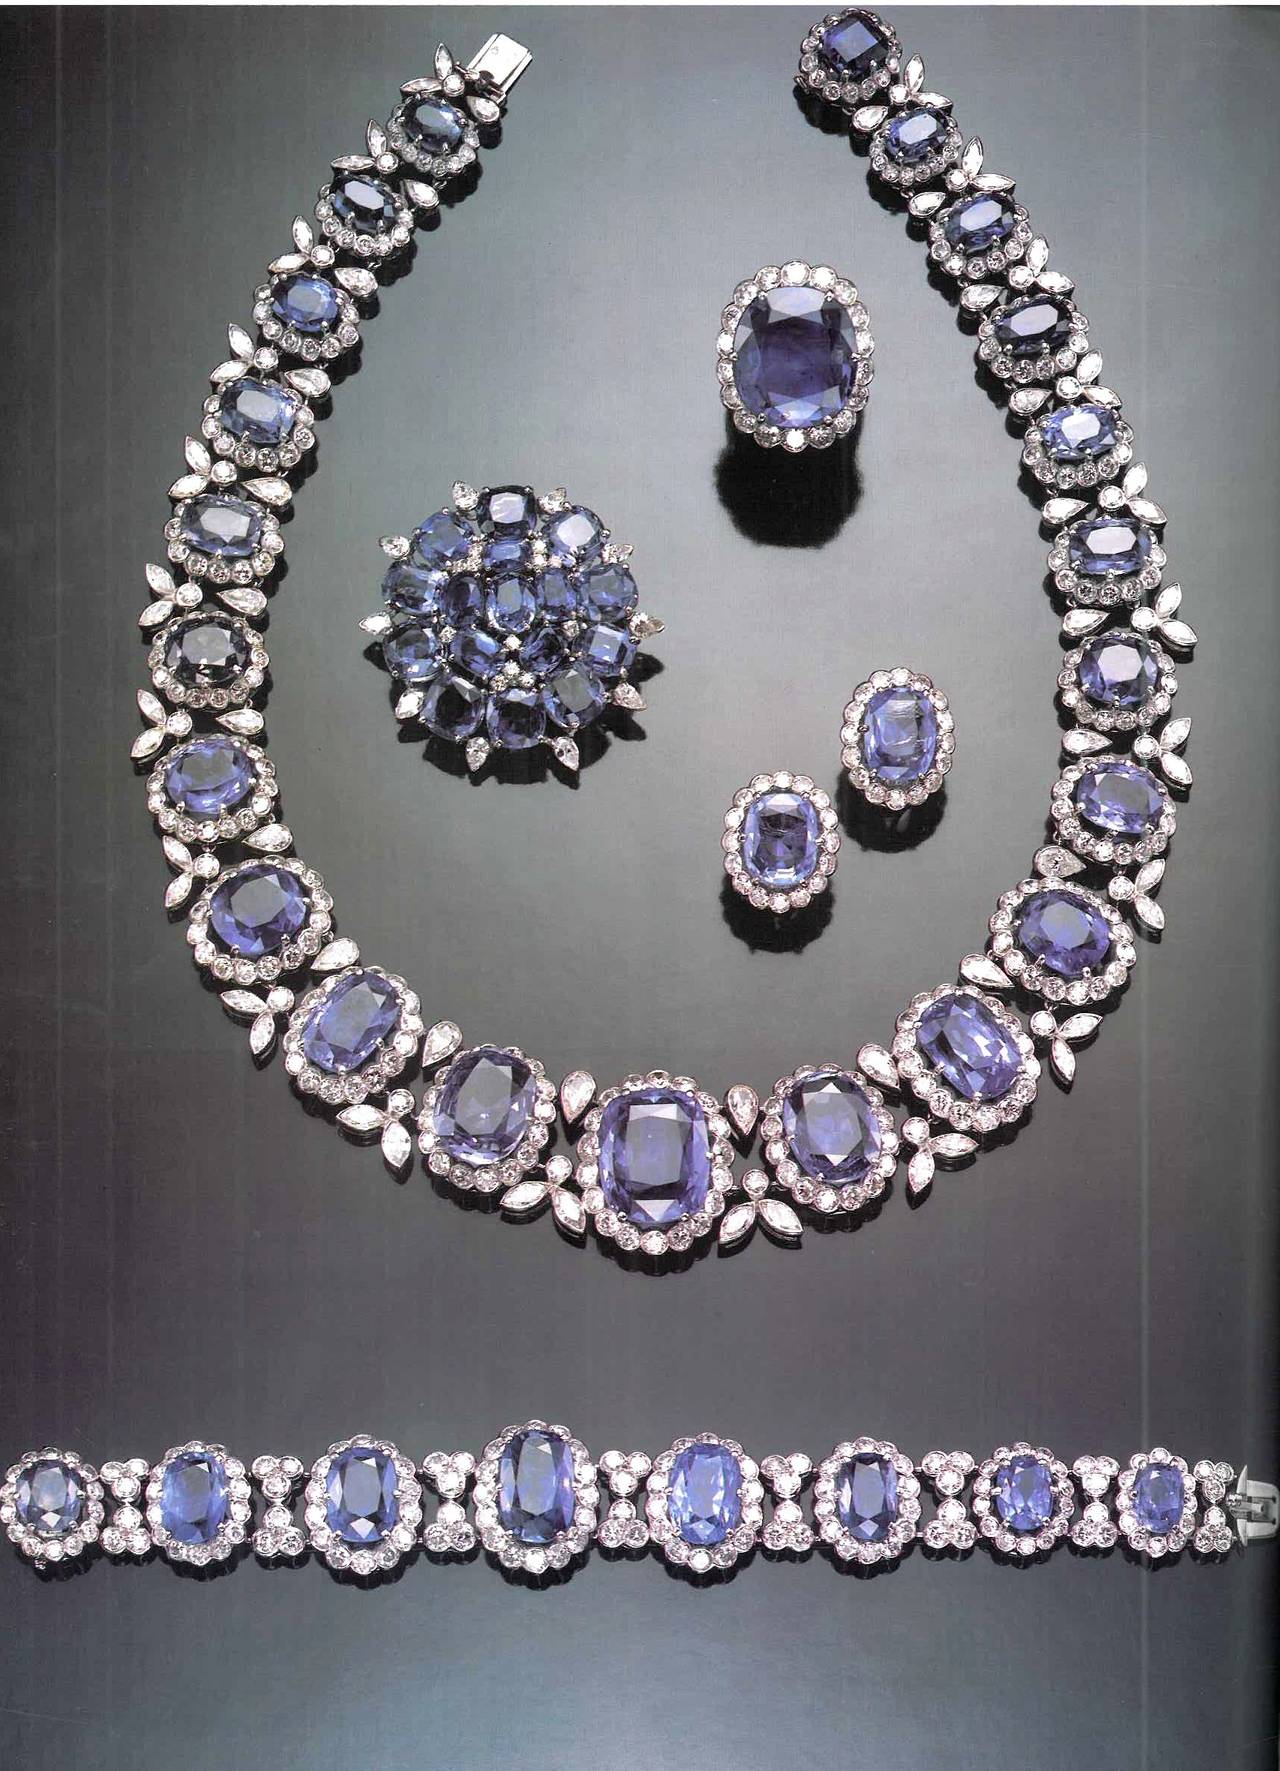 Book of Extraordinary Jewels by John Traina 1